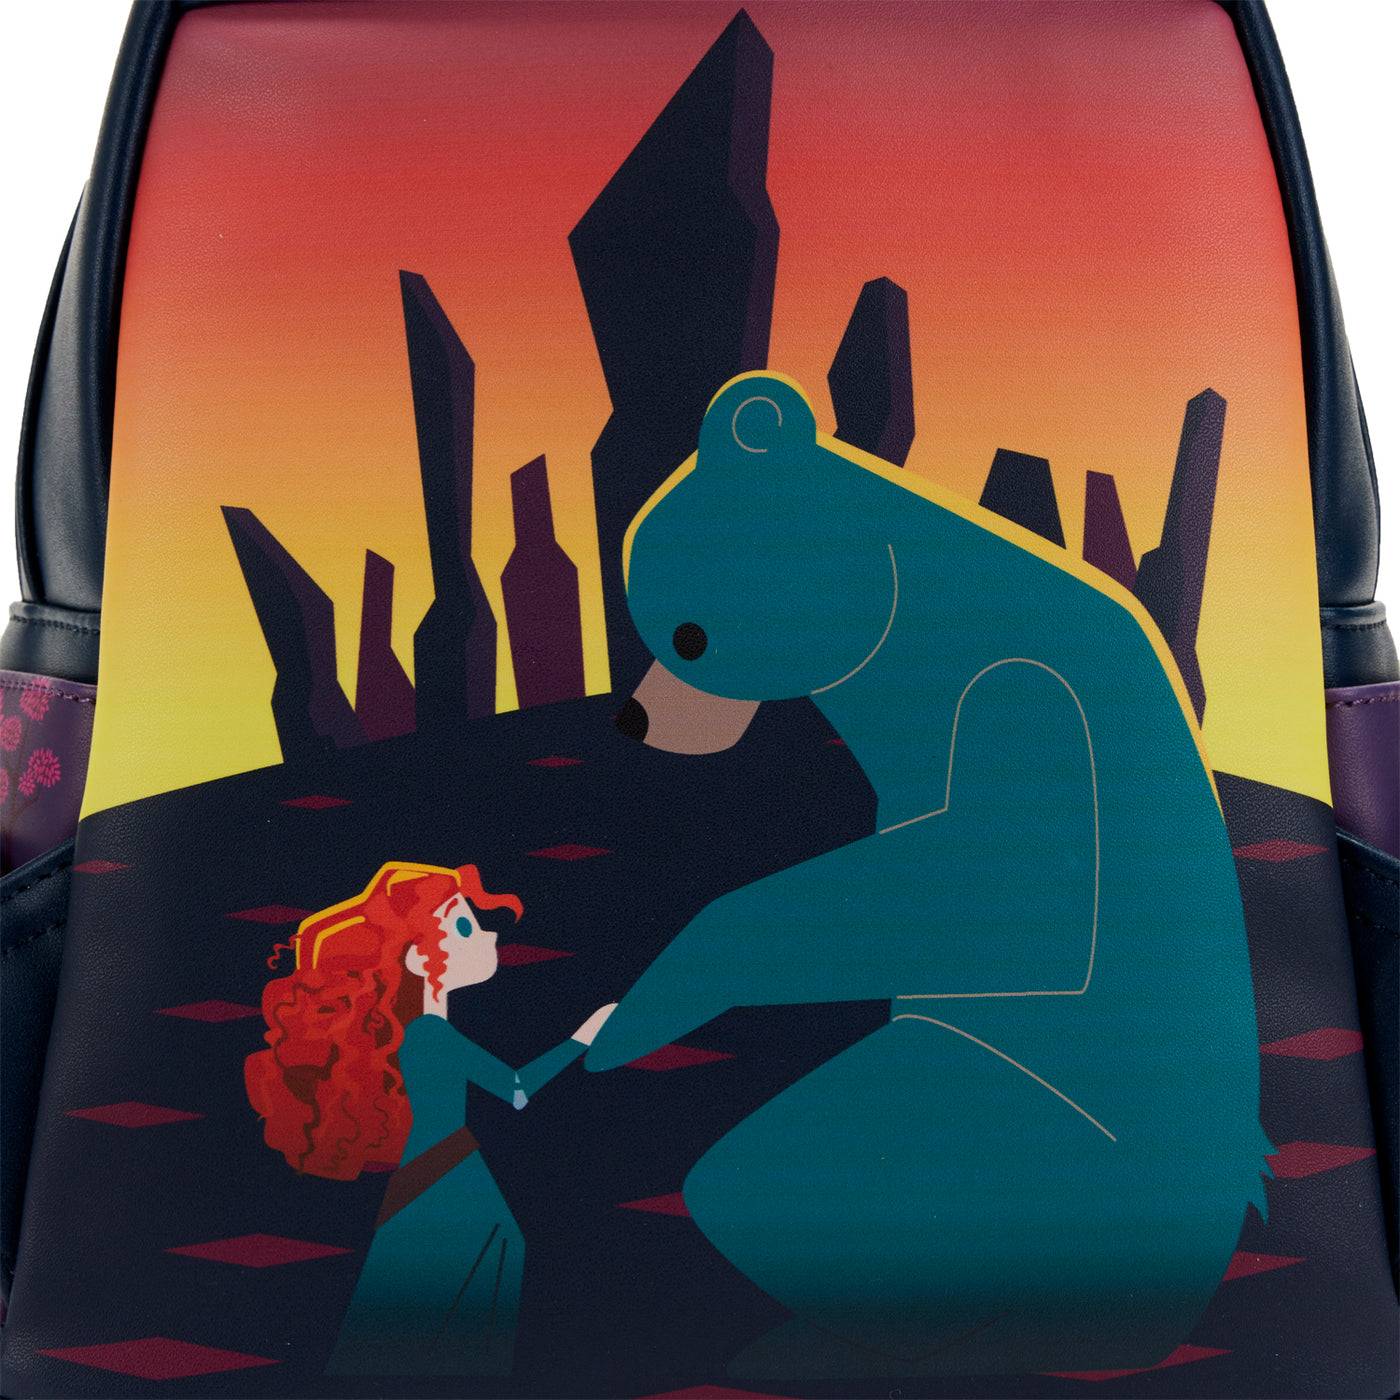 Loungefly Disney Pixar Brave Princess Castle Series Mini Backpack